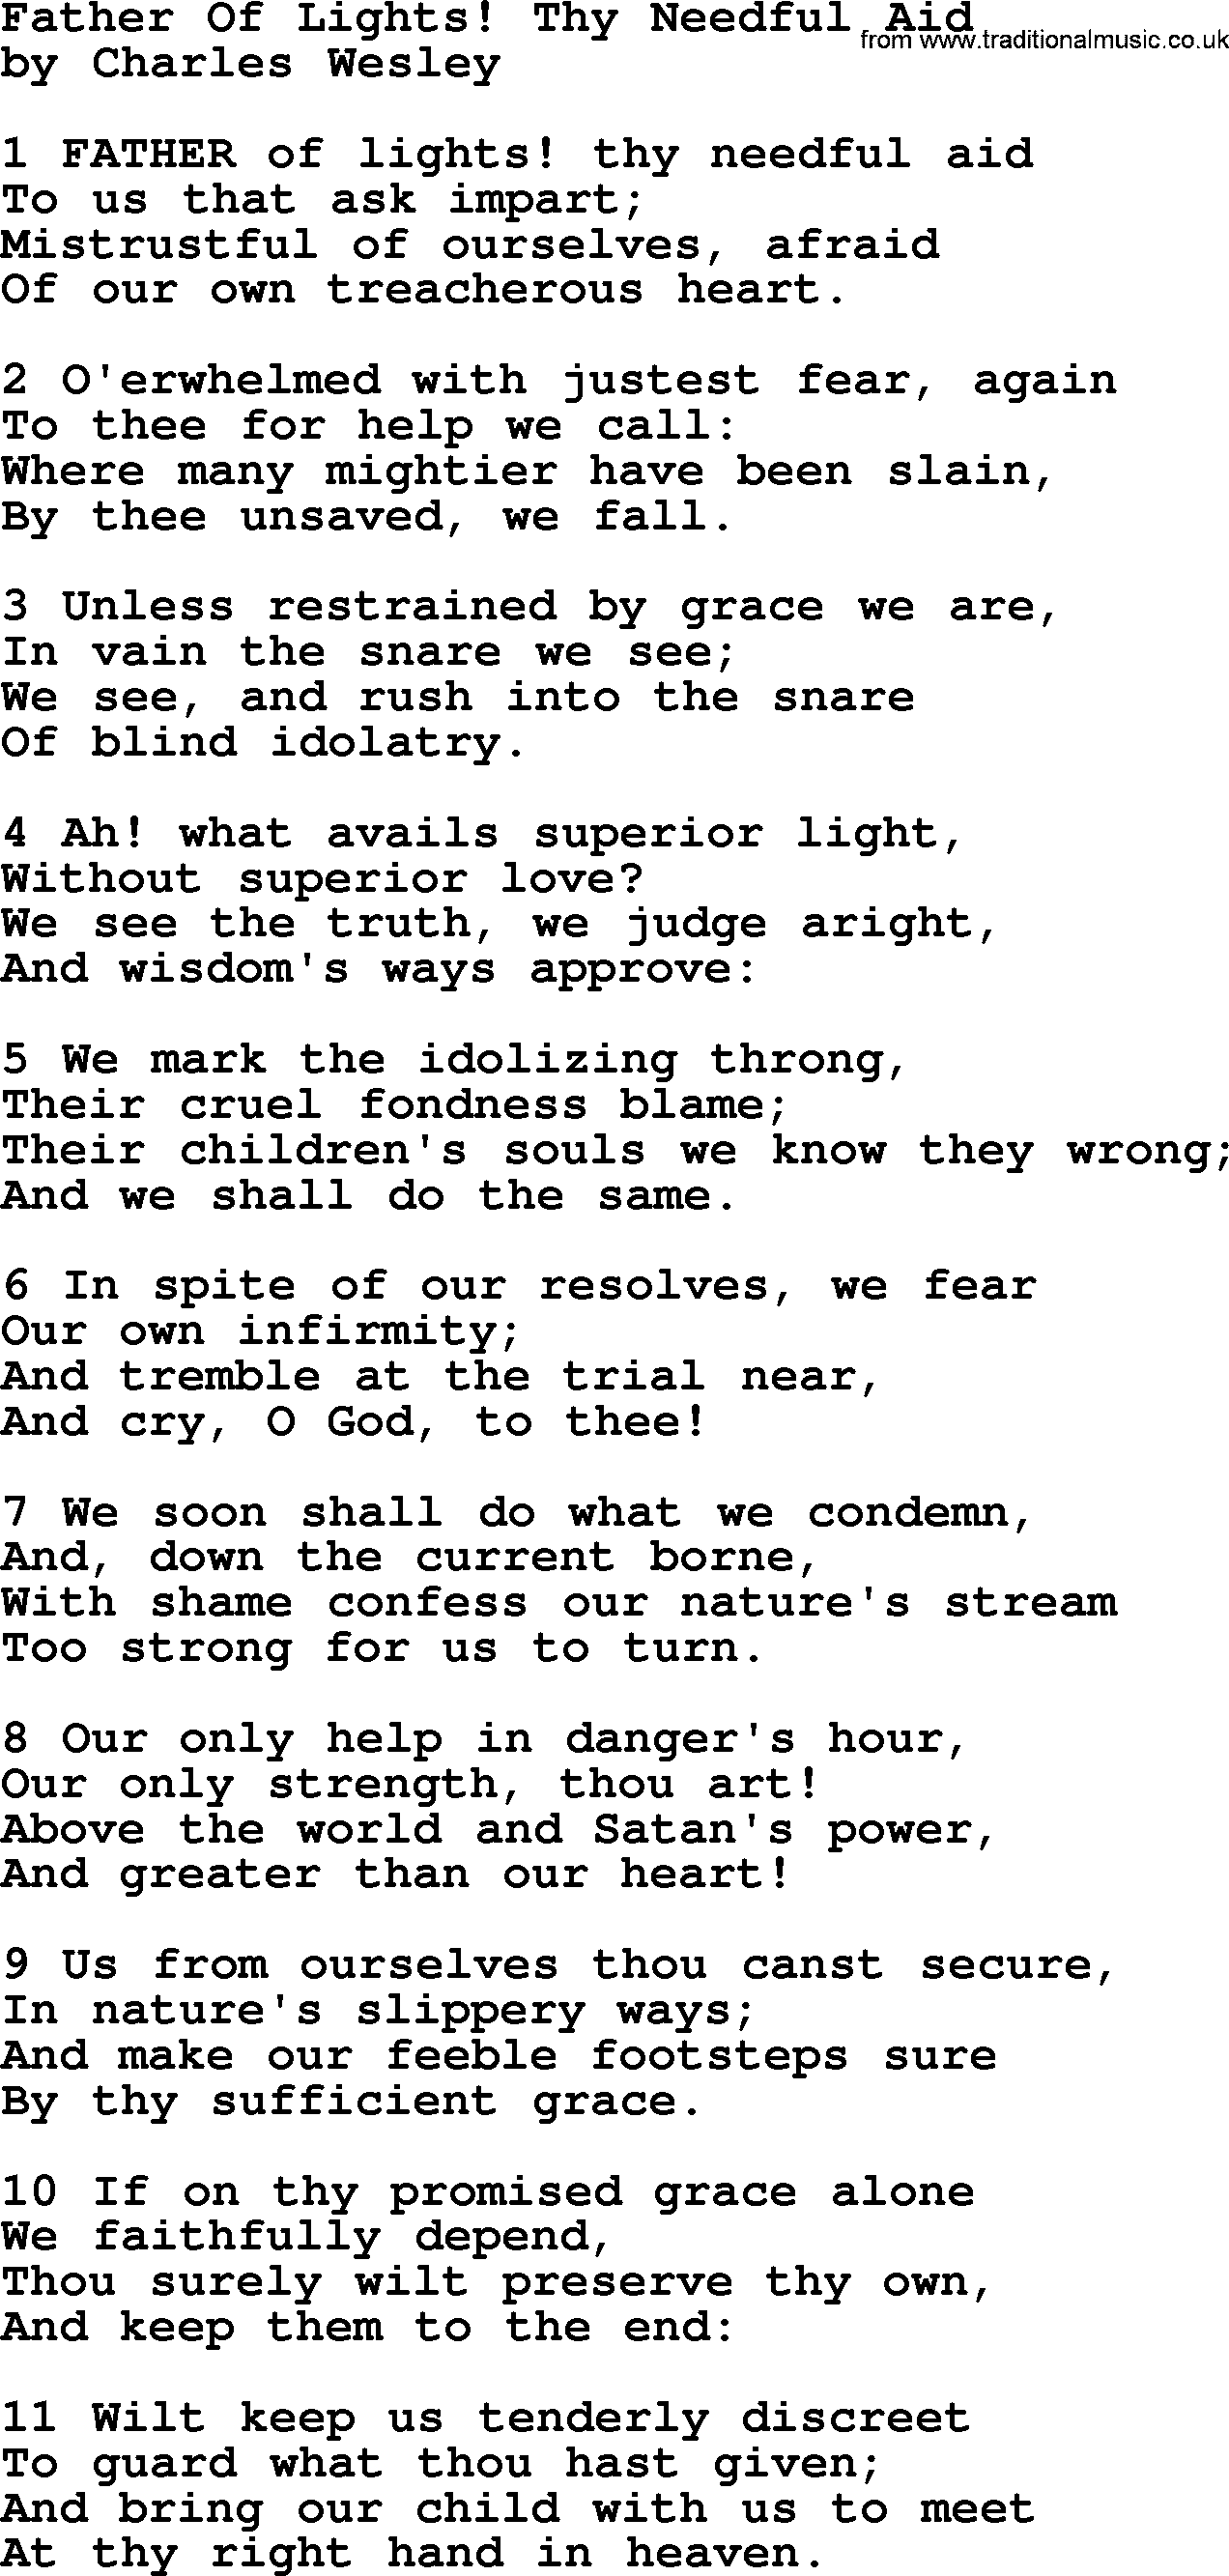 Charles Wesley hymn: Father Of Lights! Thy Needful Aid, lyrics